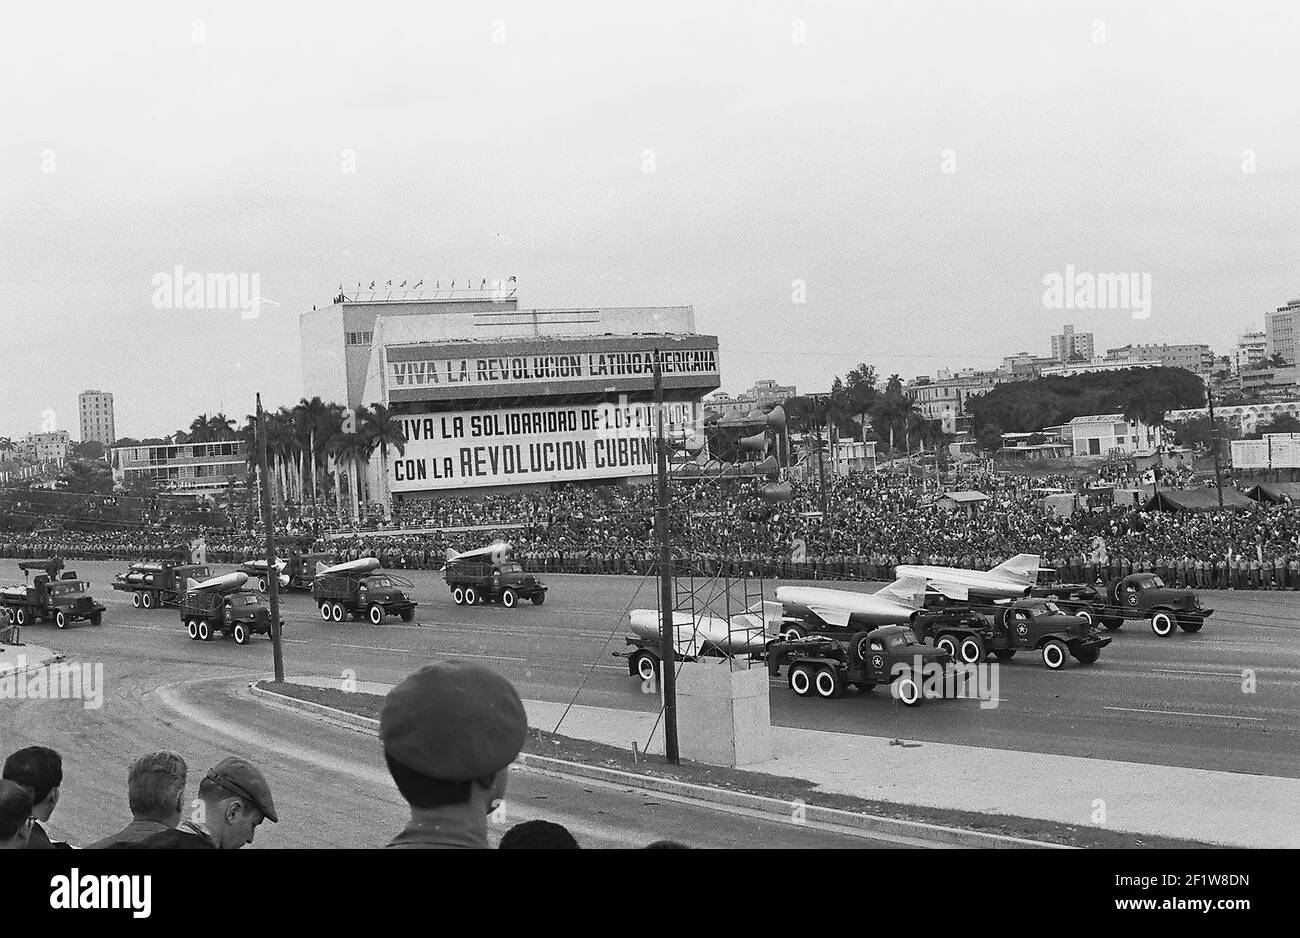 Fighter planes, military parade, Havana (Cuba : Province), Havana (Cuba), Cuba, 1963. From the Deena Stryker photographs collection. () Stock Photo